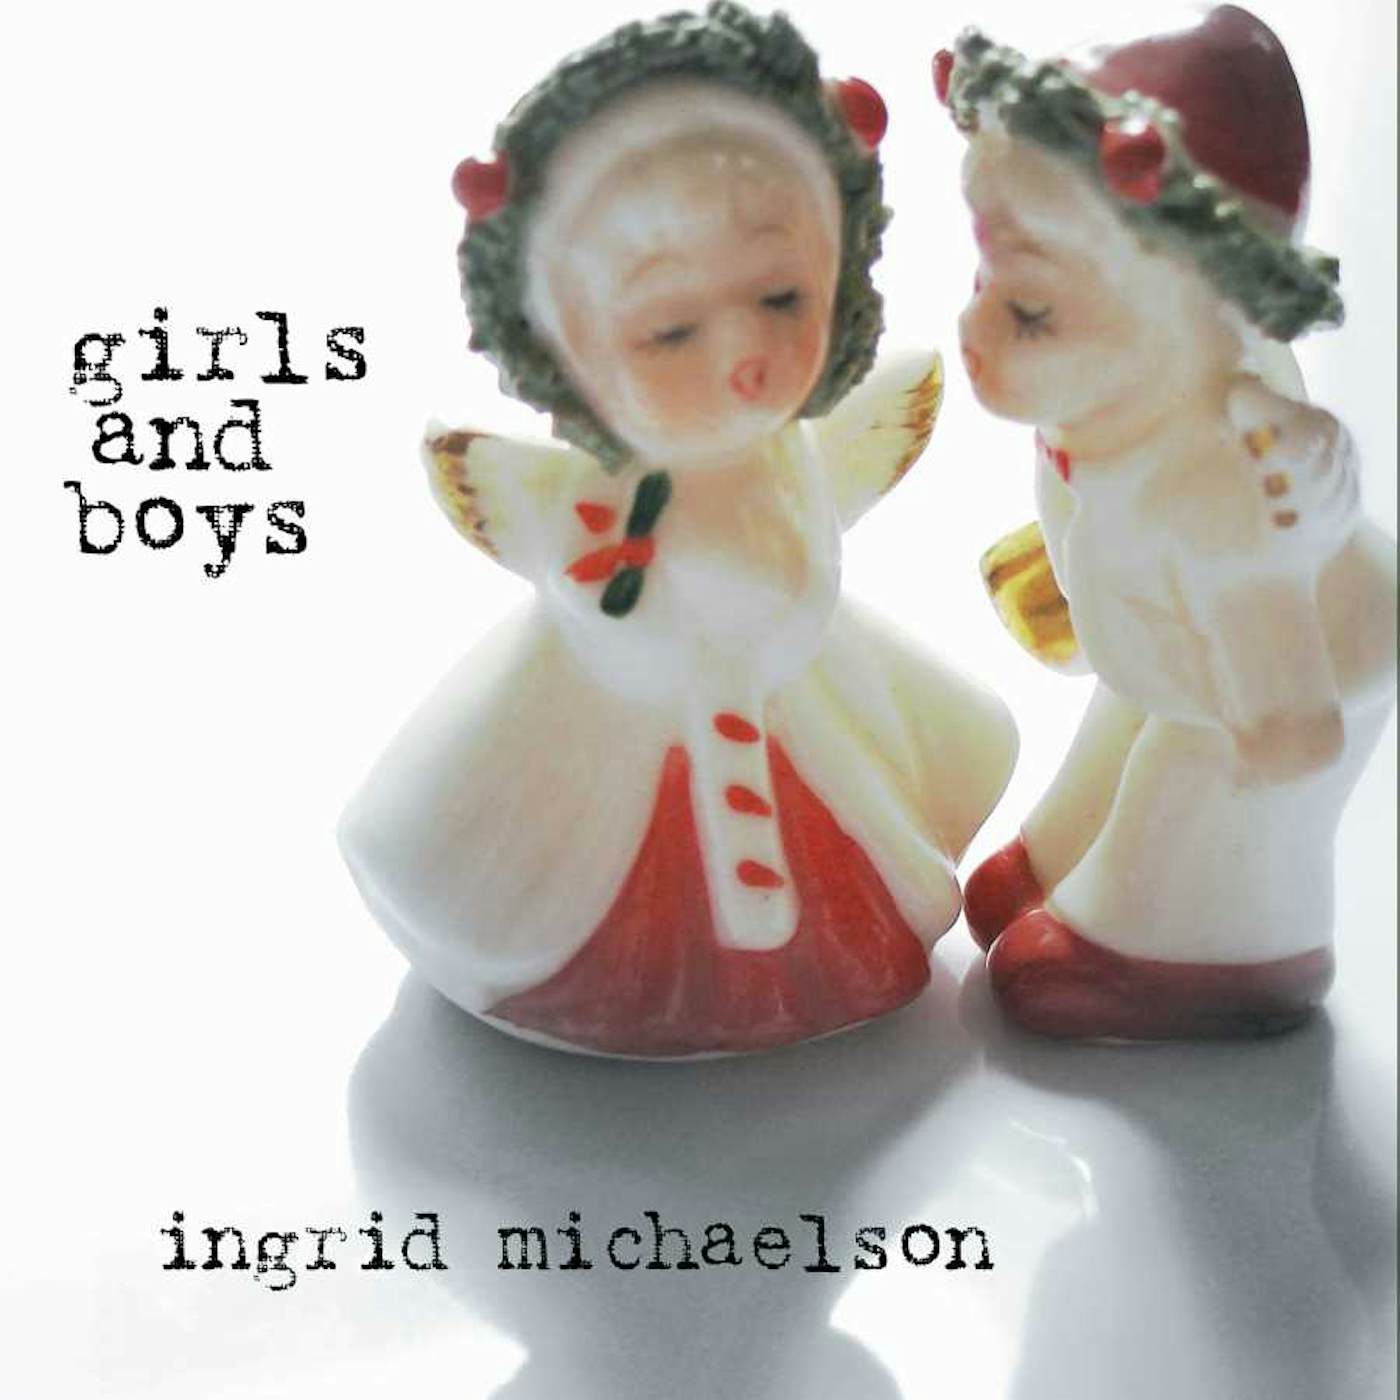 Ingrid Michaelson Girls And Boys Vinyl Record